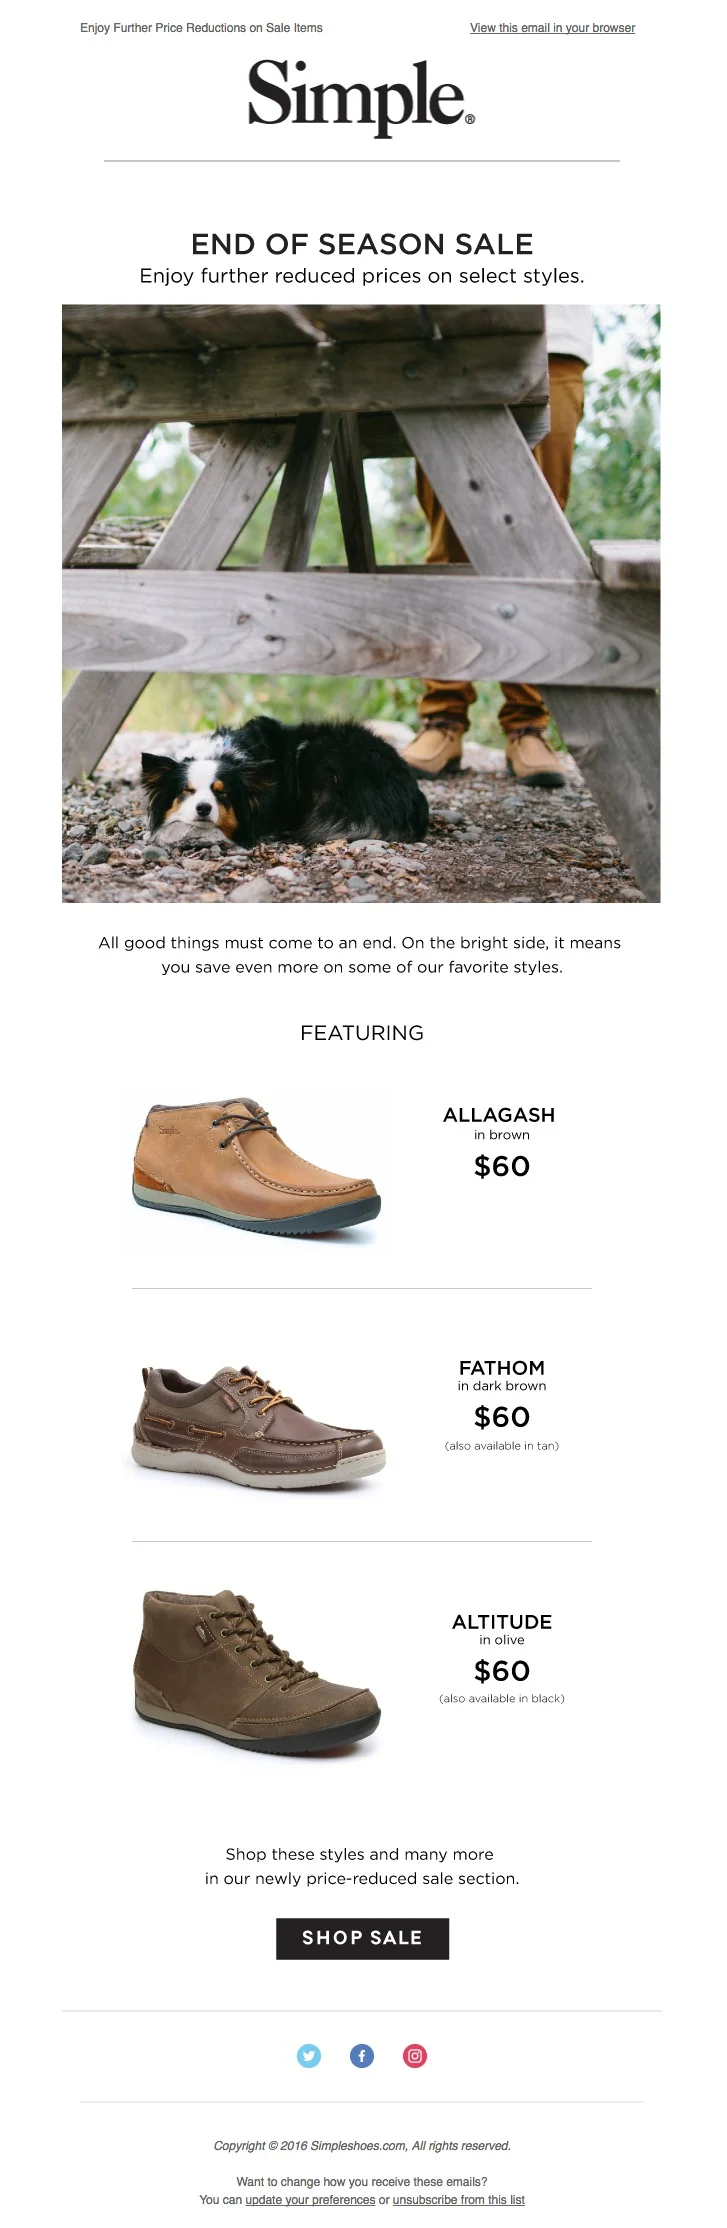 https://bcwpmktg.wpengine.com/wp-content/uploads/2016/10/ecommerce-email-marketing-simple-shoes-1.jpg